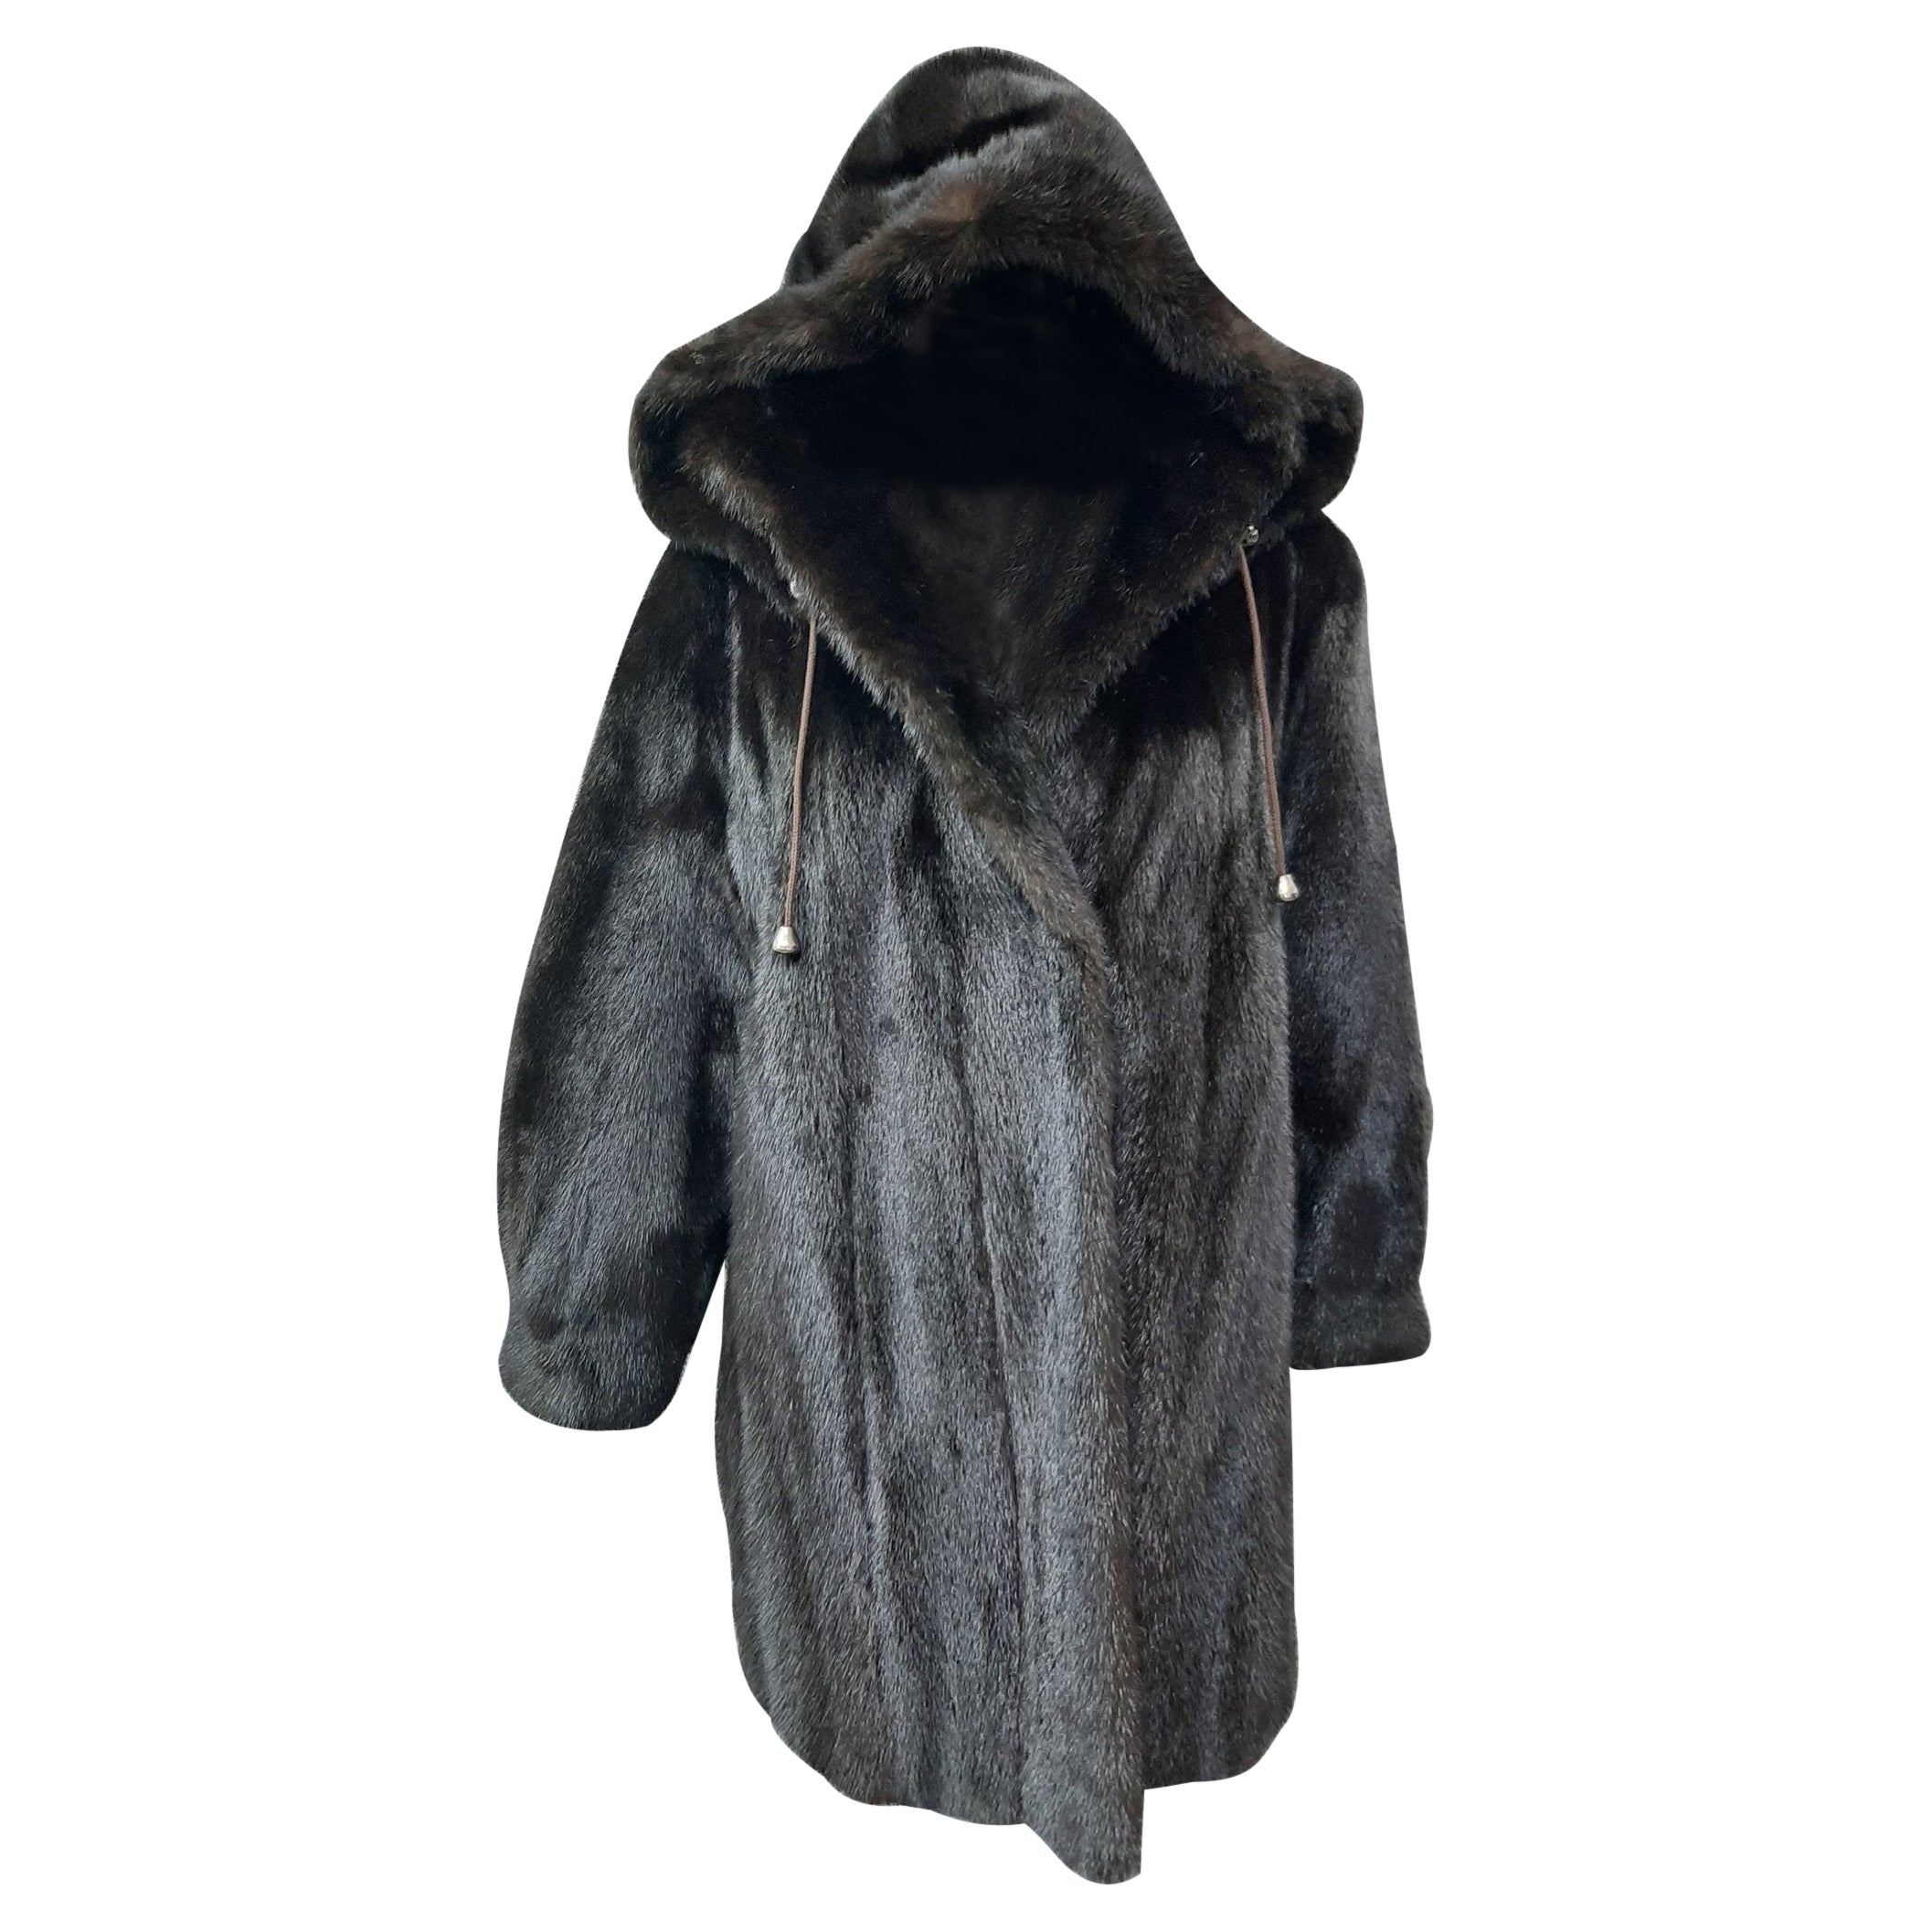 Unused mink fur coat with a hood size 10-12